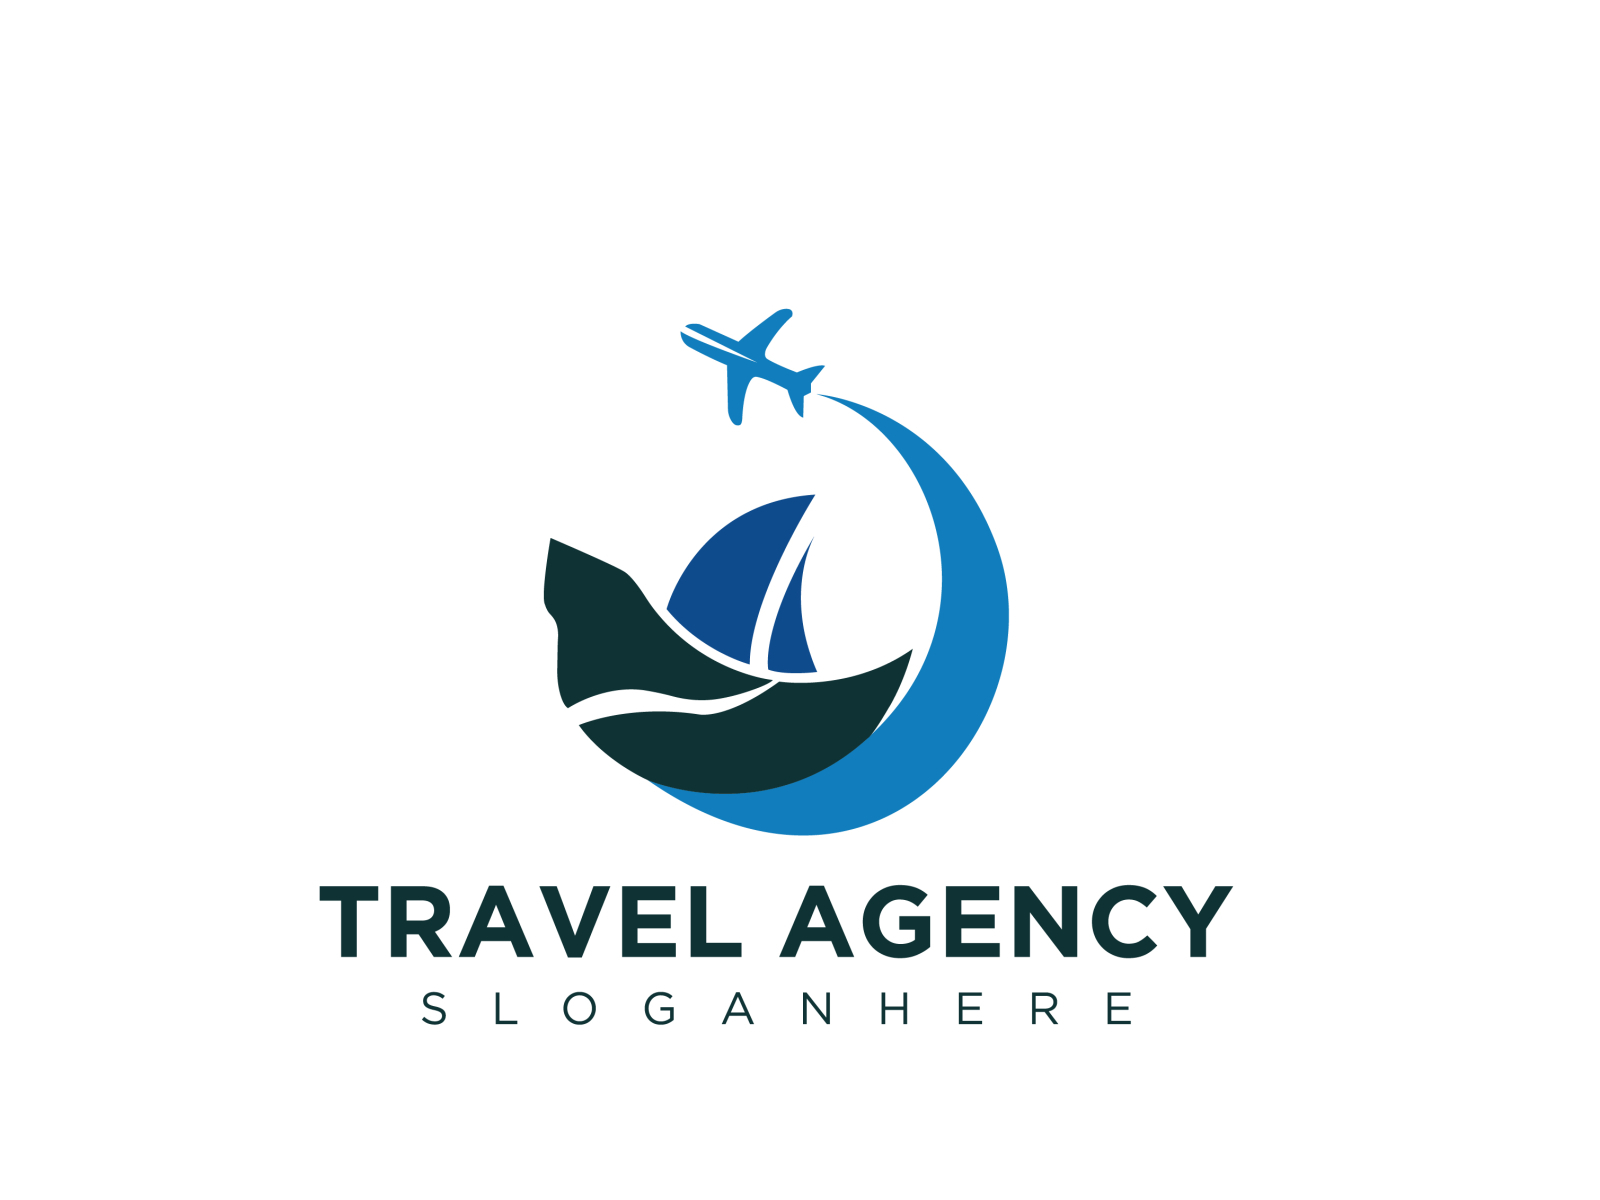 Professional Travel Agency Logo Design By Designersalah On Dribbble